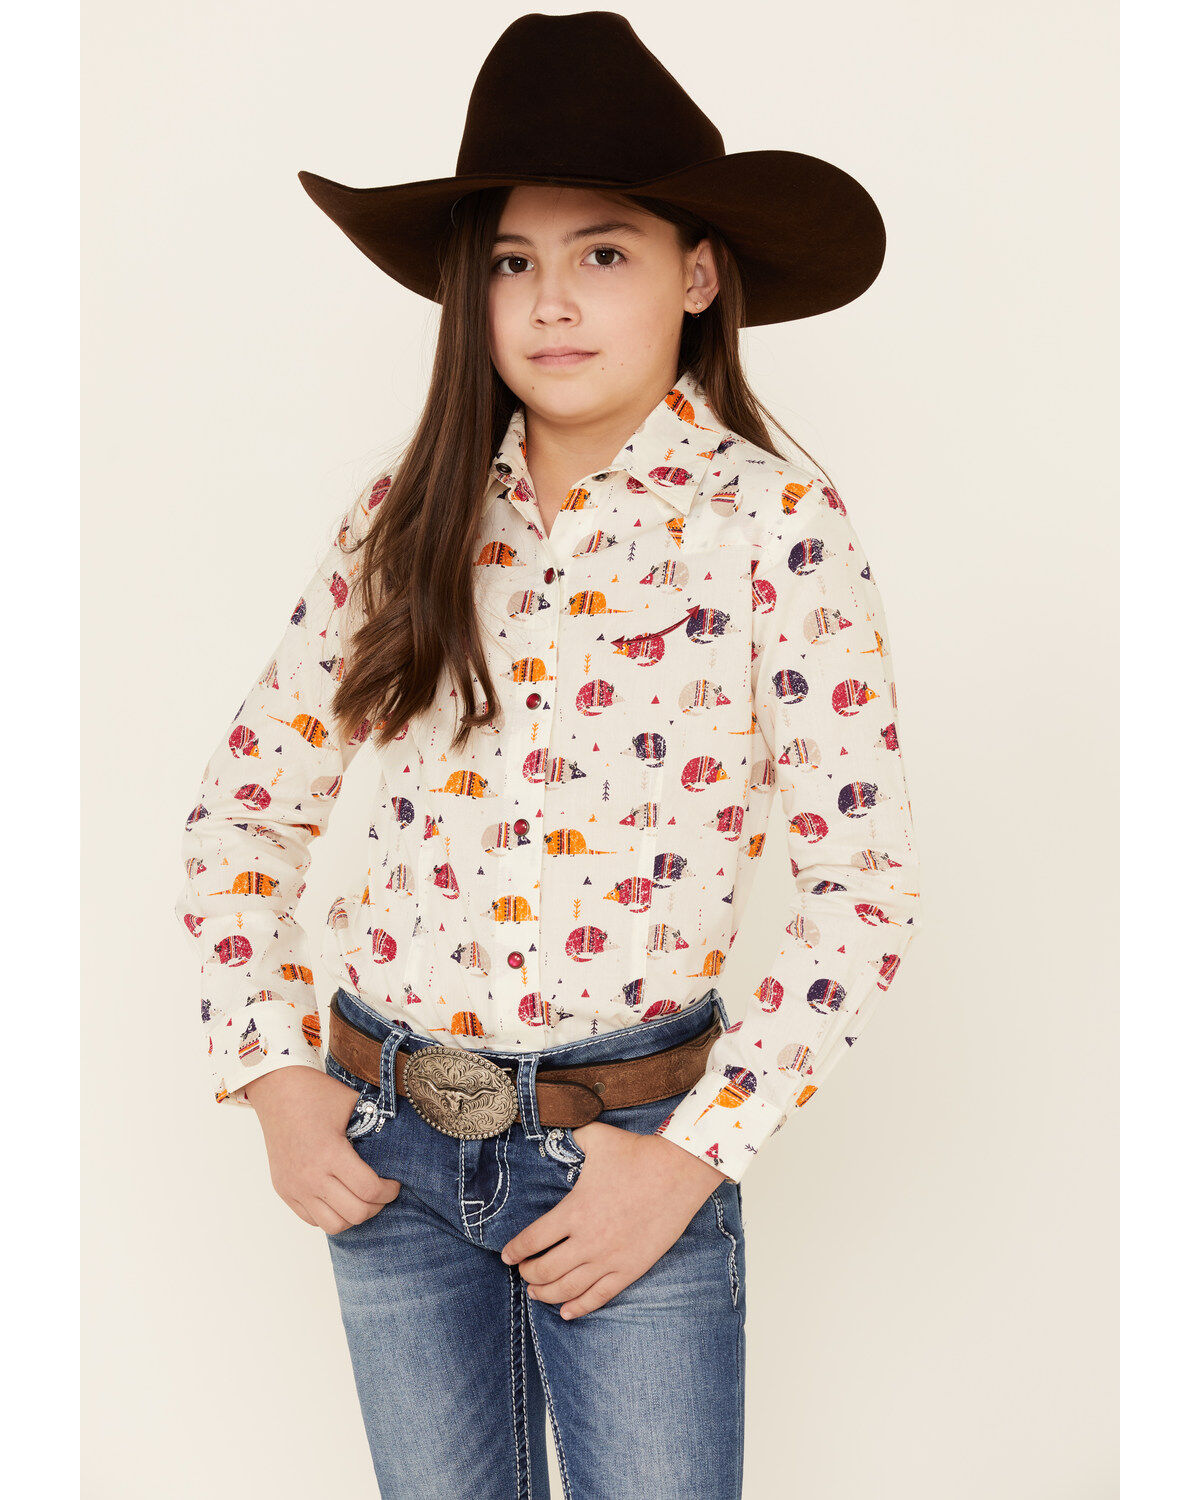 cowboy shirts for ladies